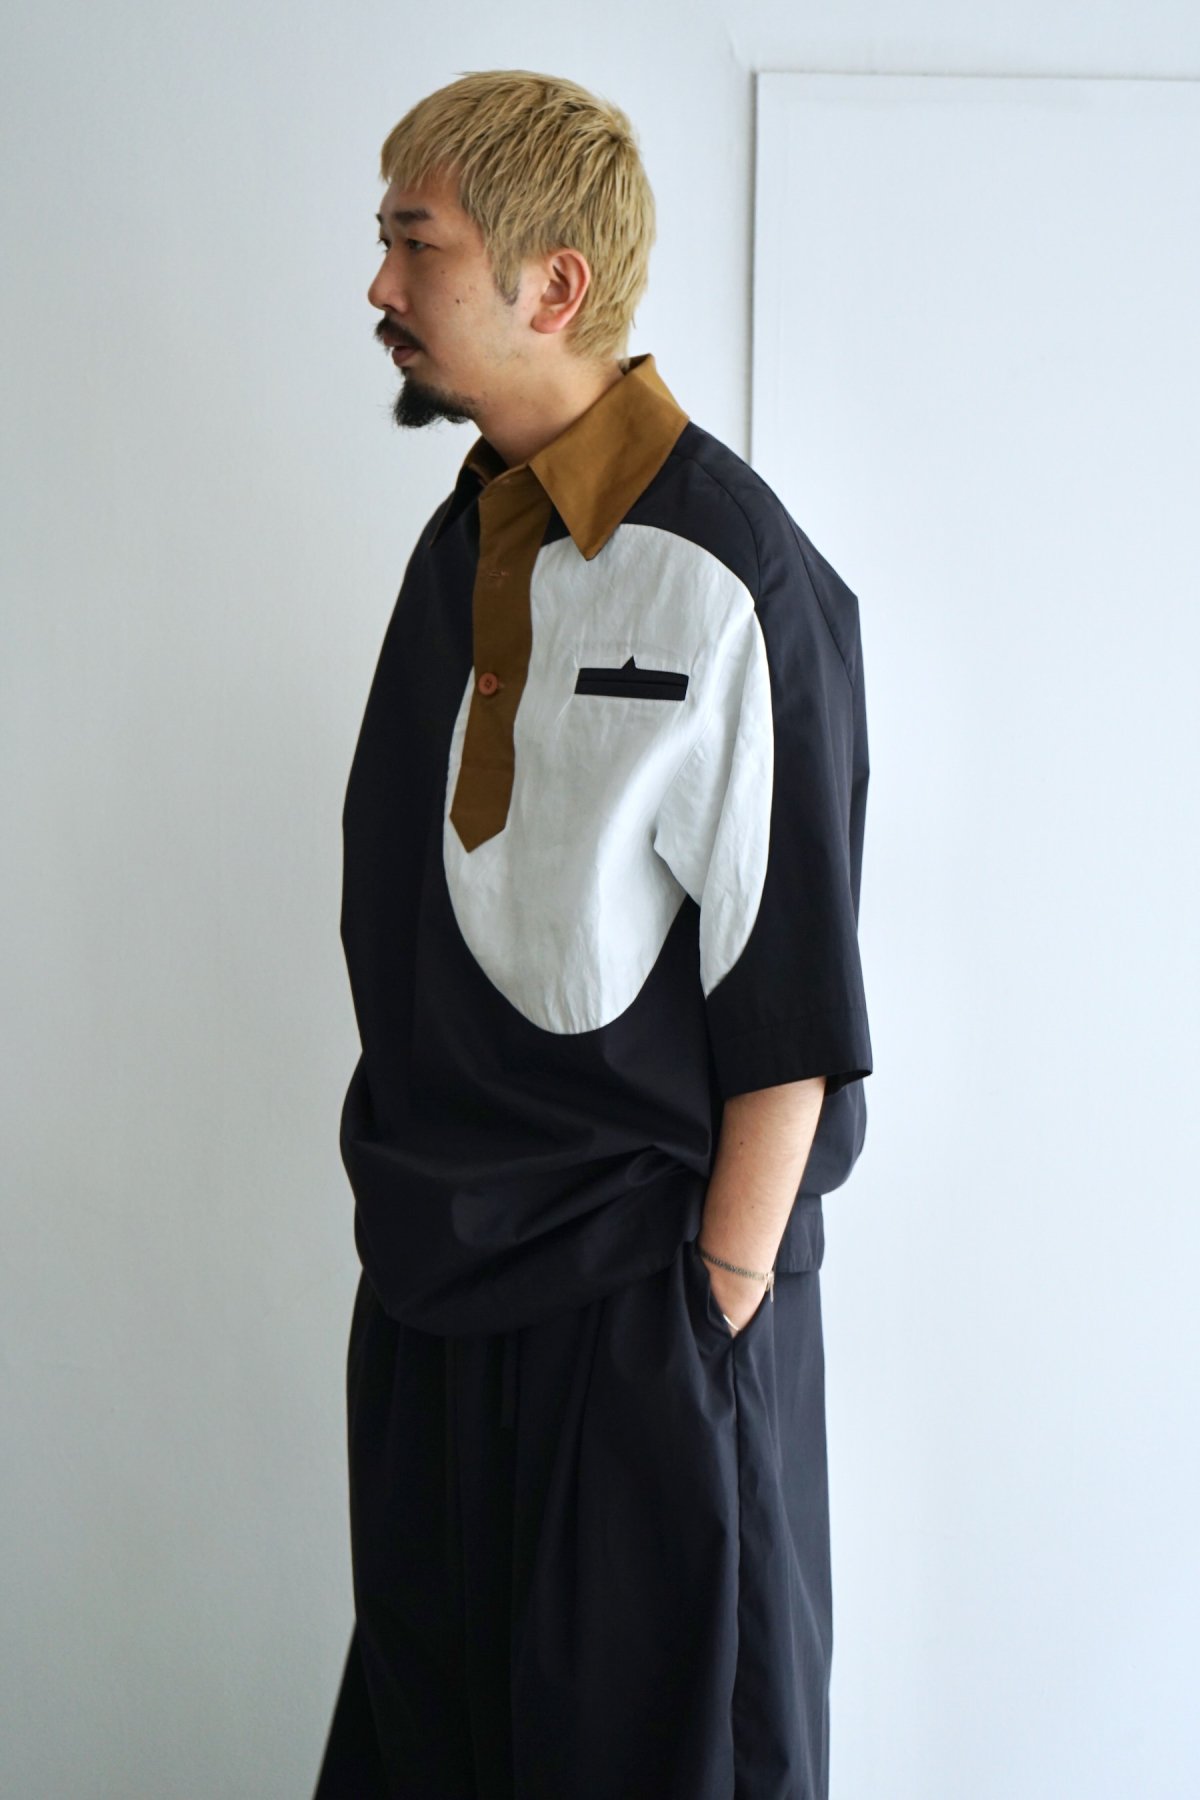 MAI GIDAH / Raglan sleeve Cotton Poloshirt with contrast collar and insert / Navy, Ochre, White